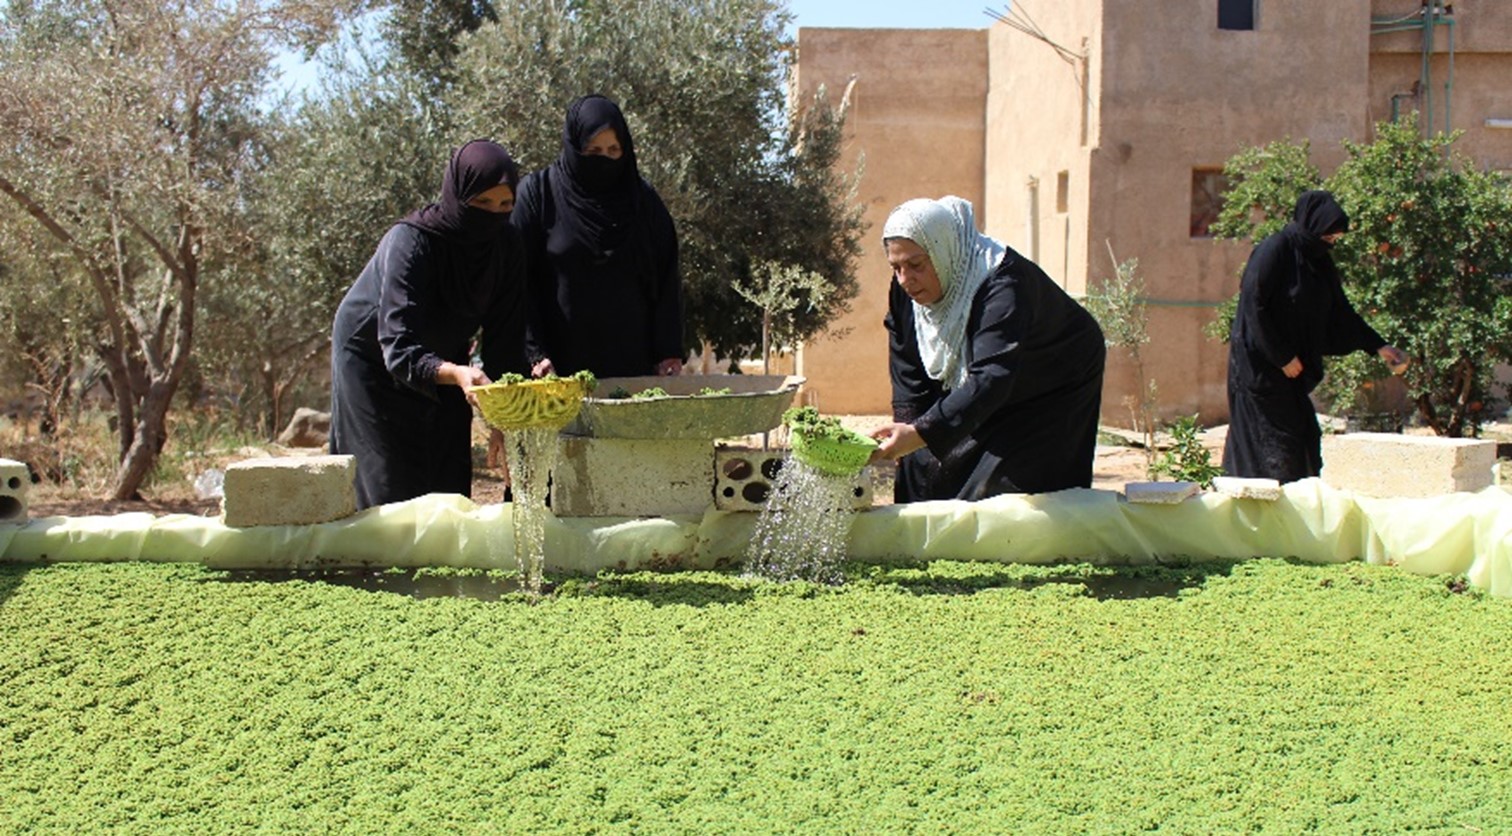 Forced Xxx Poran Videos In River - Jordan: Women's economic empowerment through azolla farming